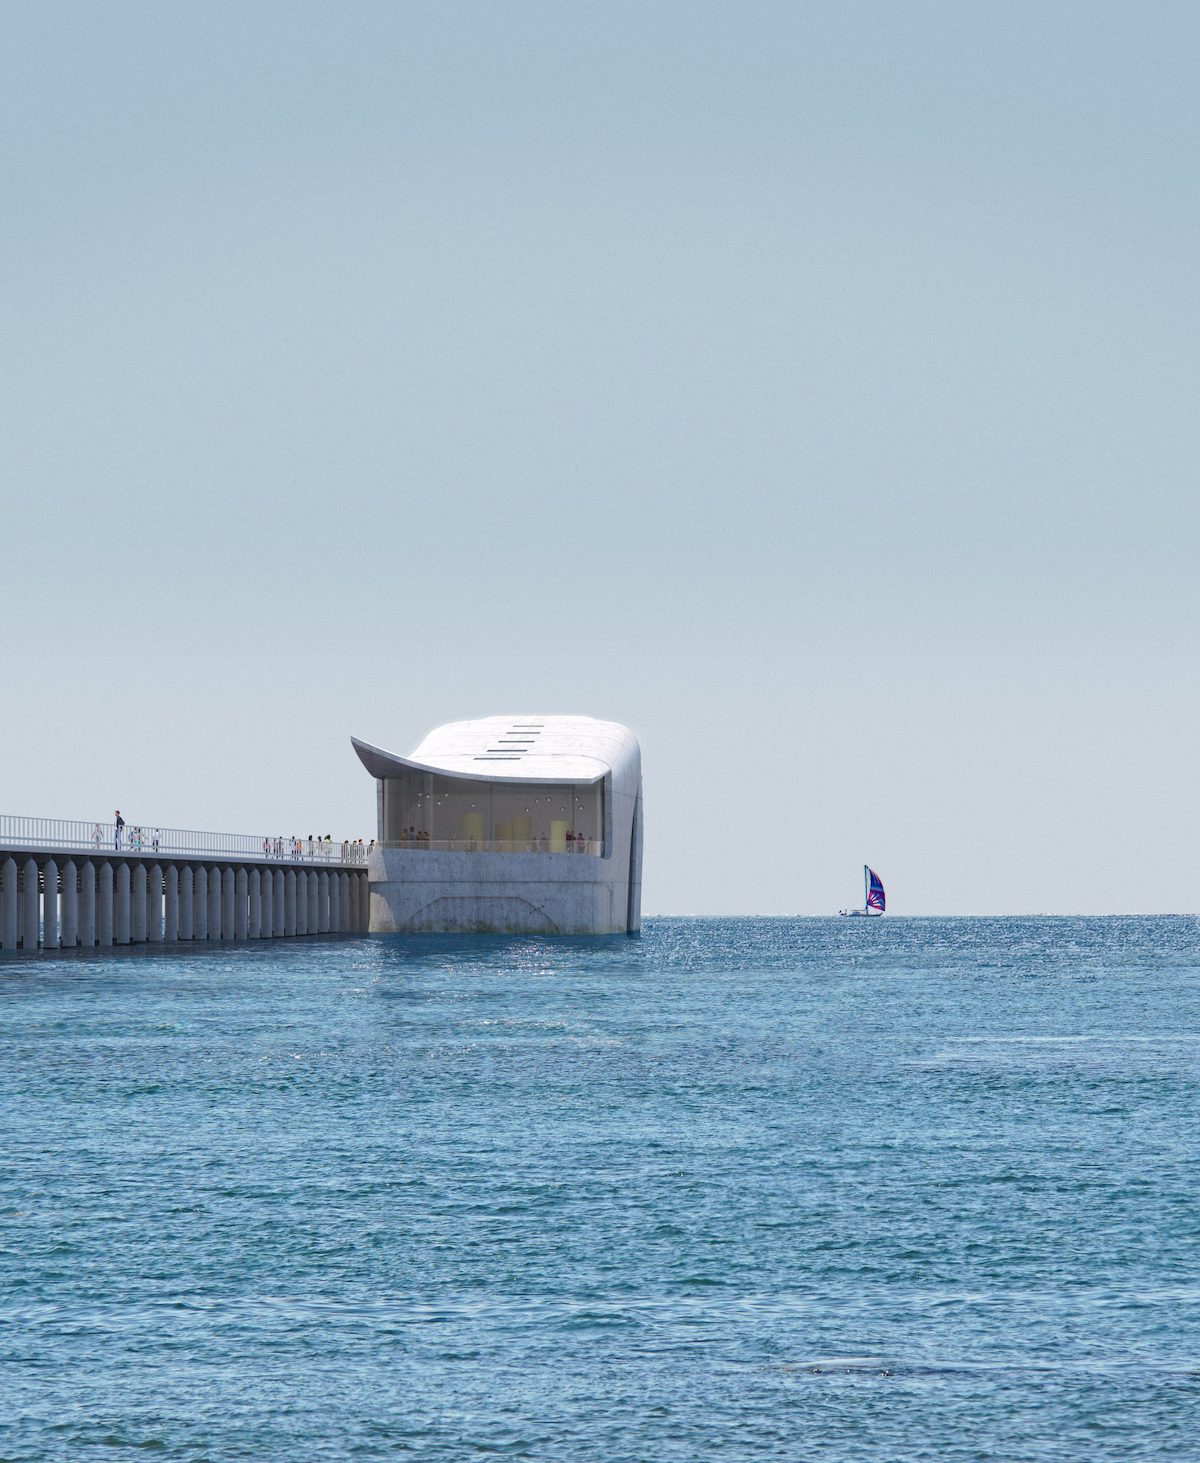 observatorio marino forma de ballena en australia